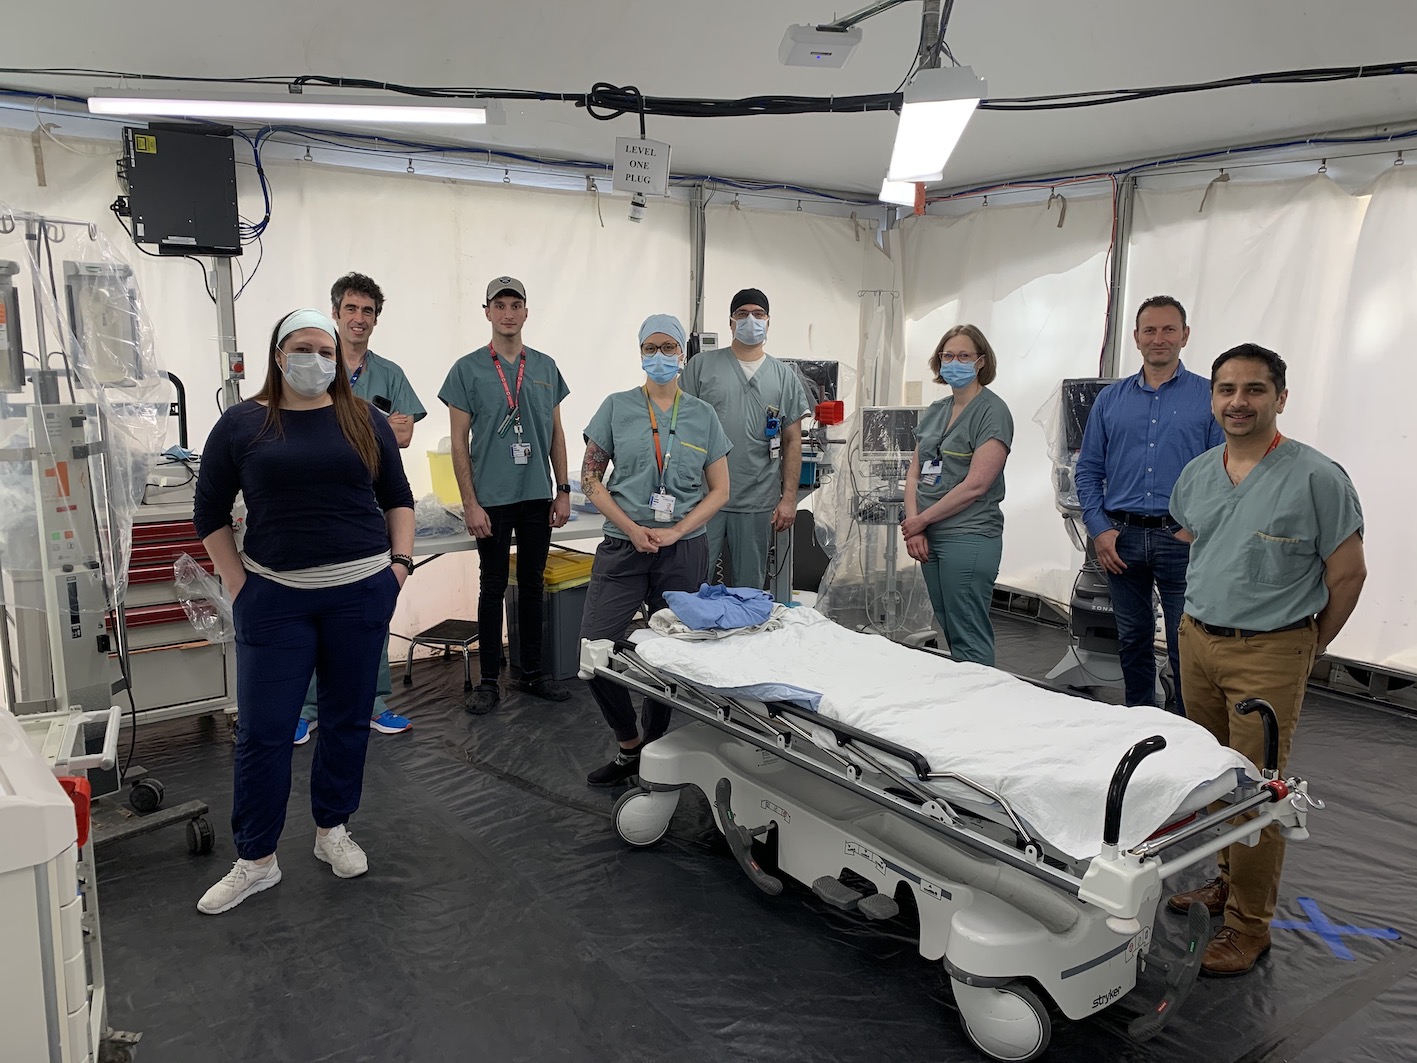 multidisciplinary teams pose inside the new resuscitation tent